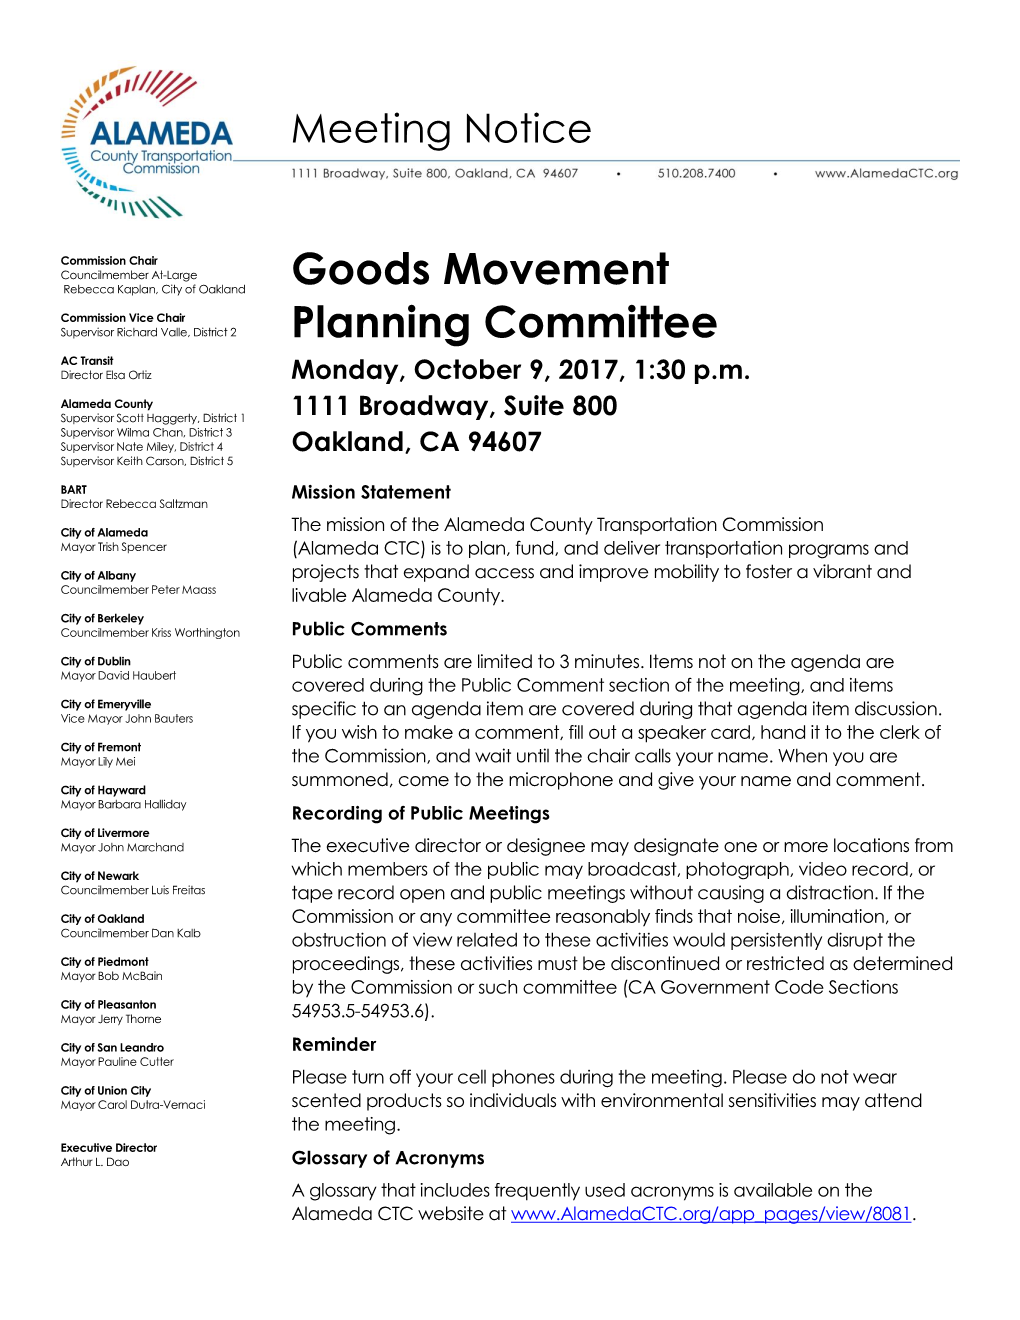 Goods Movement Planning Committee Meeting Agenda Monday, October 9, 2017, 1:30 P.M